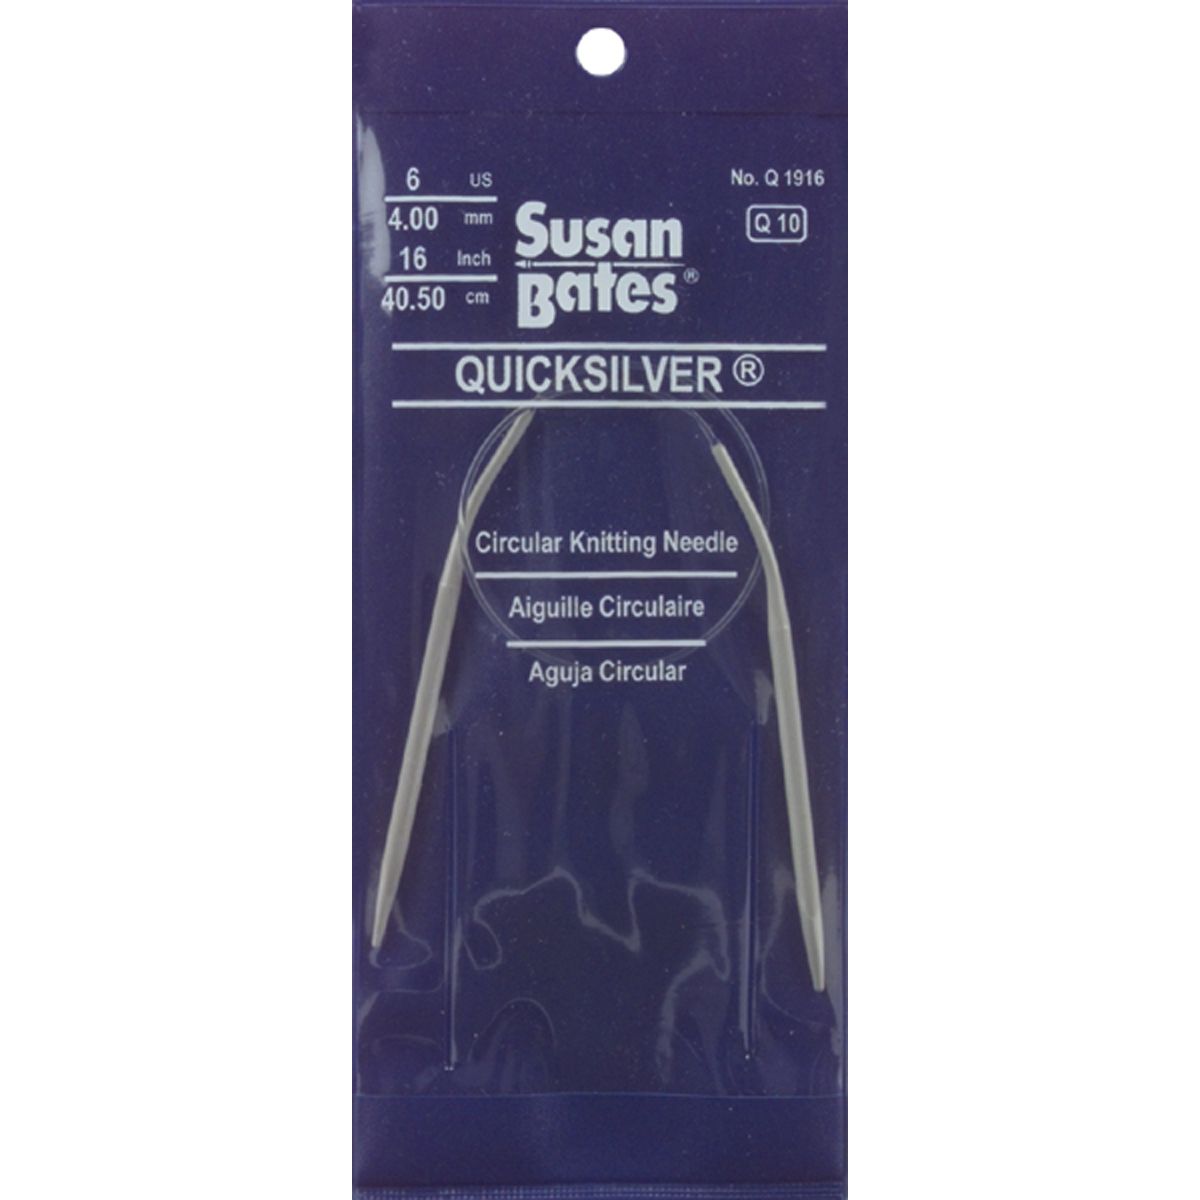 Susan Bates Quicksilver Circular Knitting Needle 16" Size 10